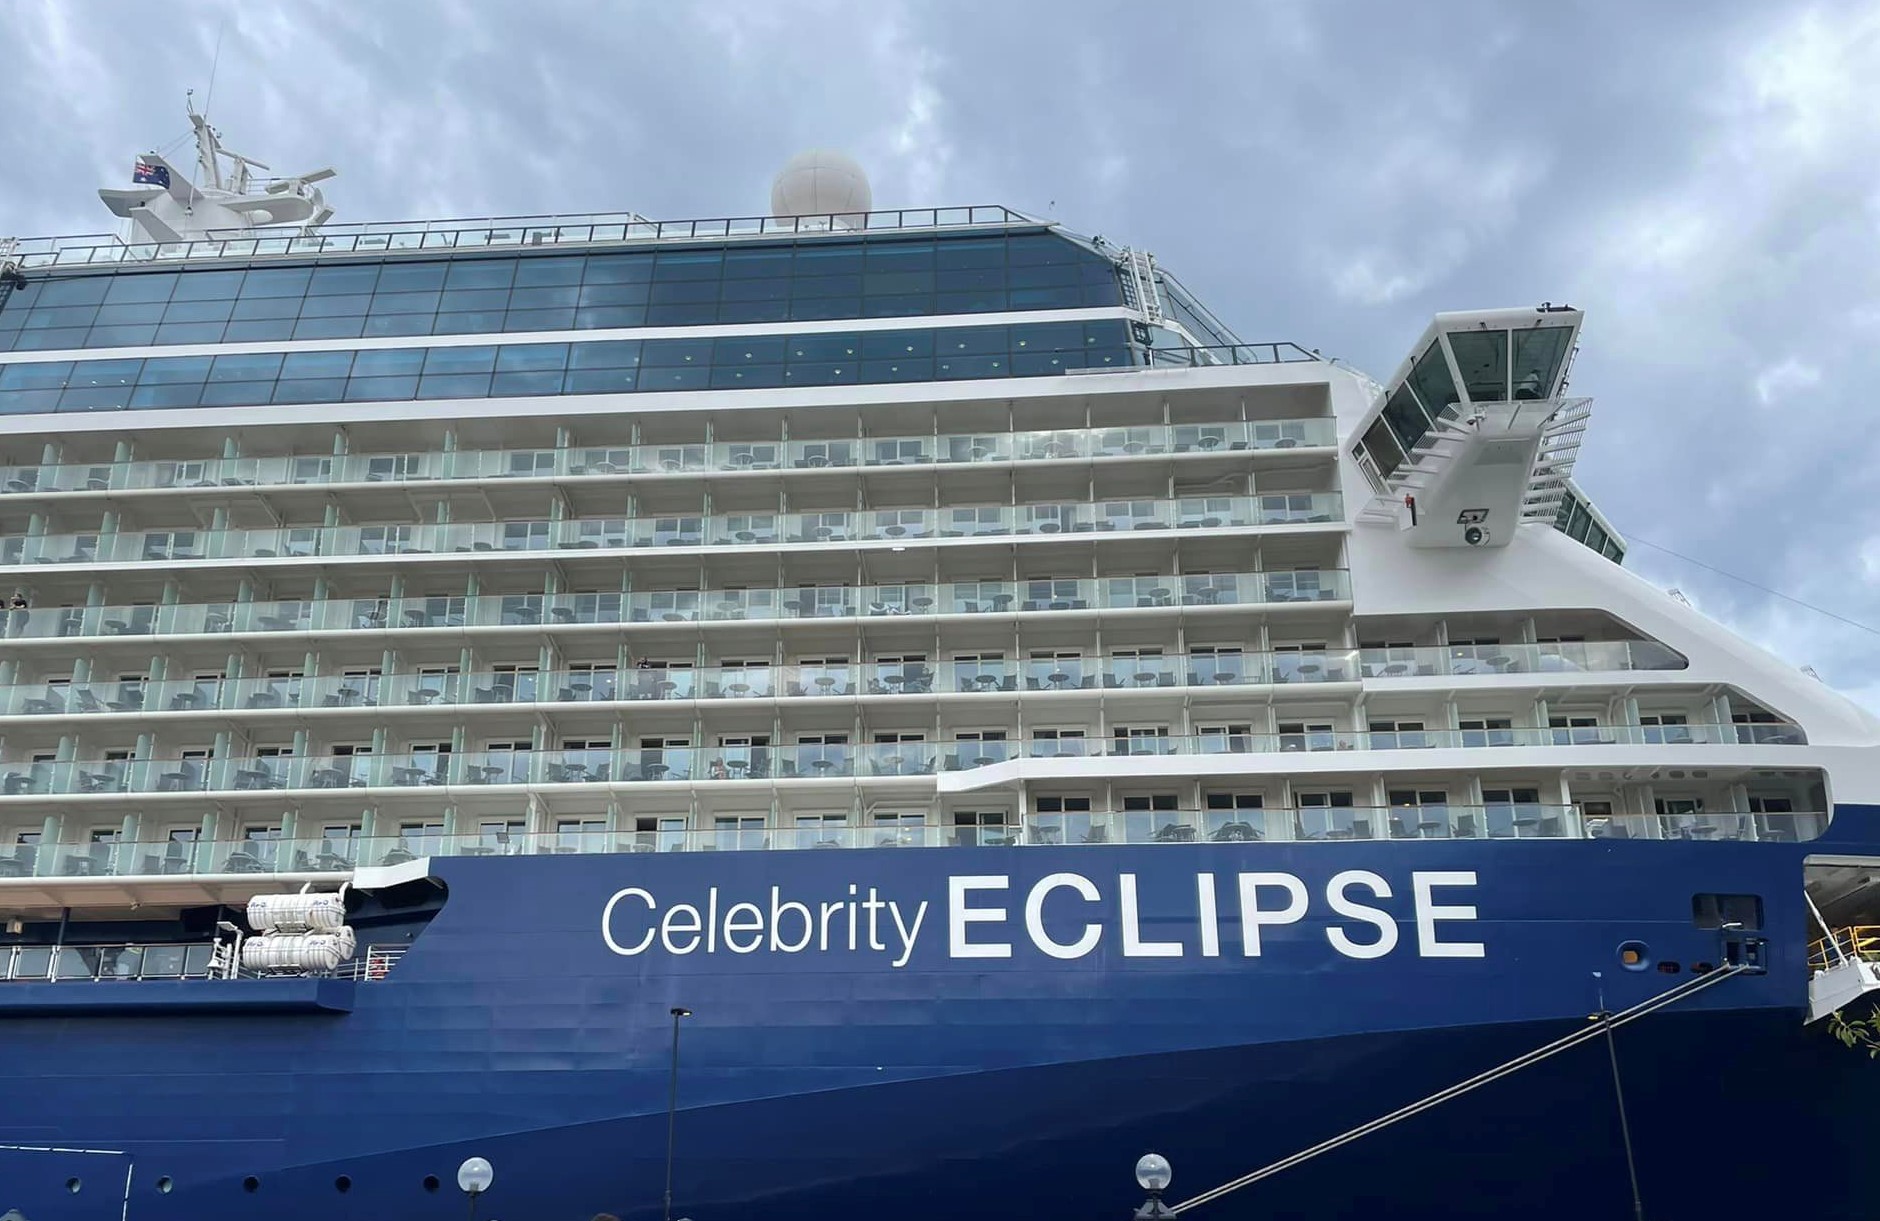 internet service on celebrity cruises